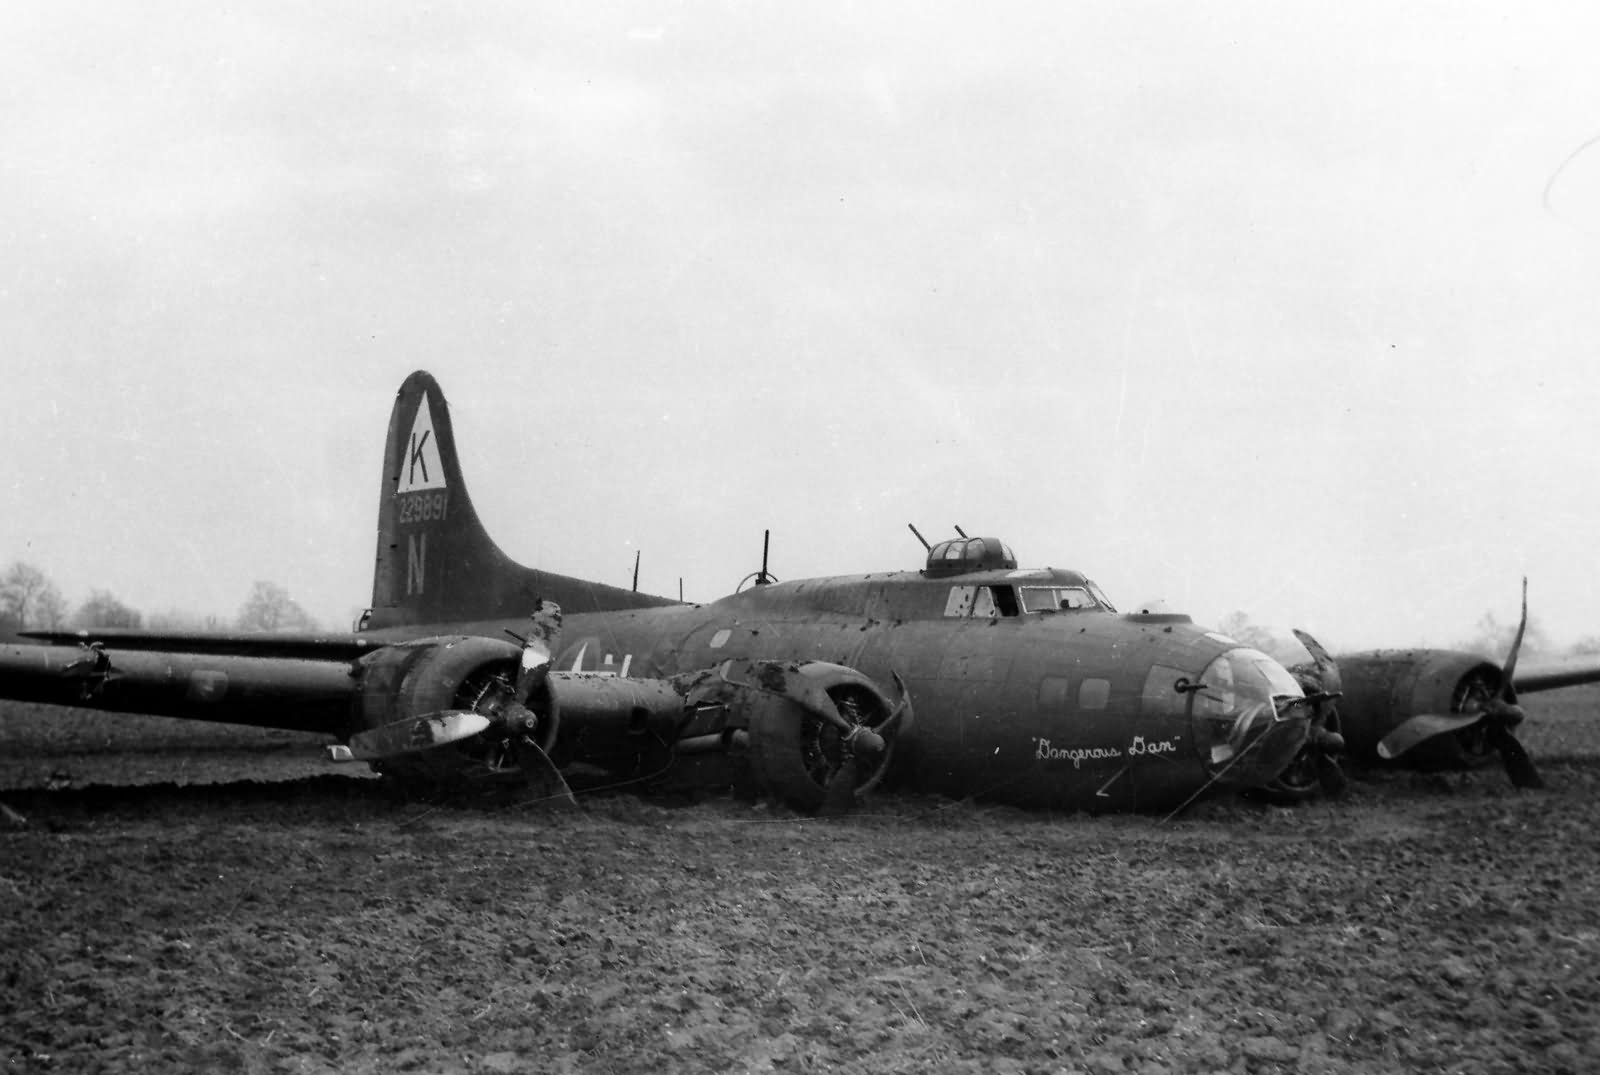 B-17_Battle_Damaged_379th_Bomb_Group_Flying_Fortress_42-29891.jpg